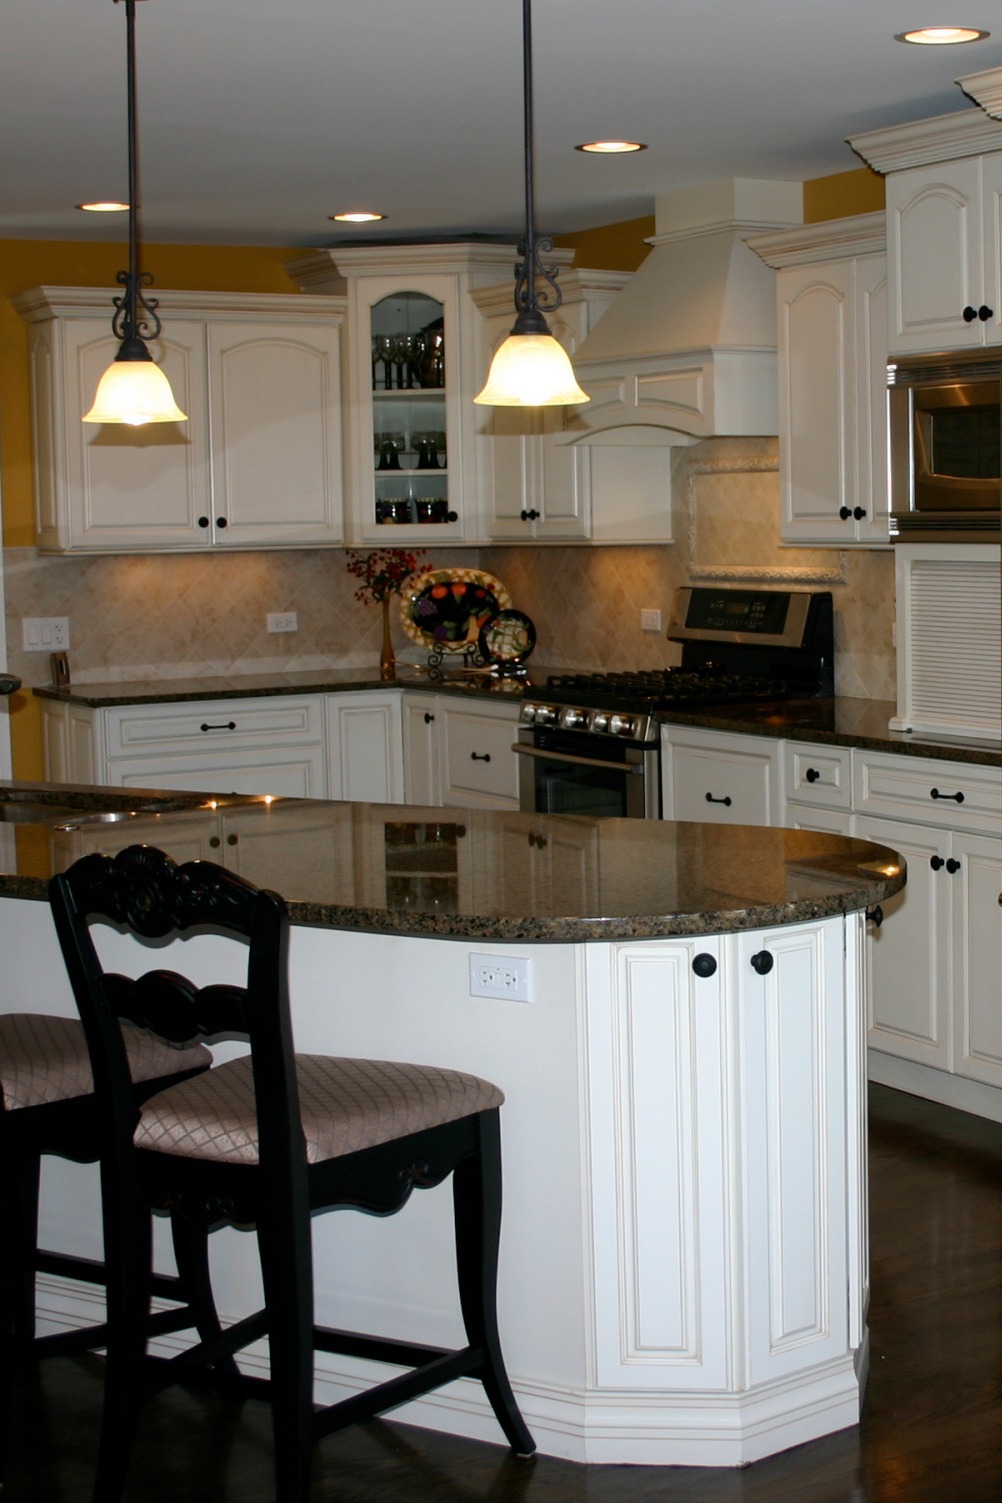 Brown Granite Countertop White Cabinet Cream Backsplash Tile Dark Hardwood Floor